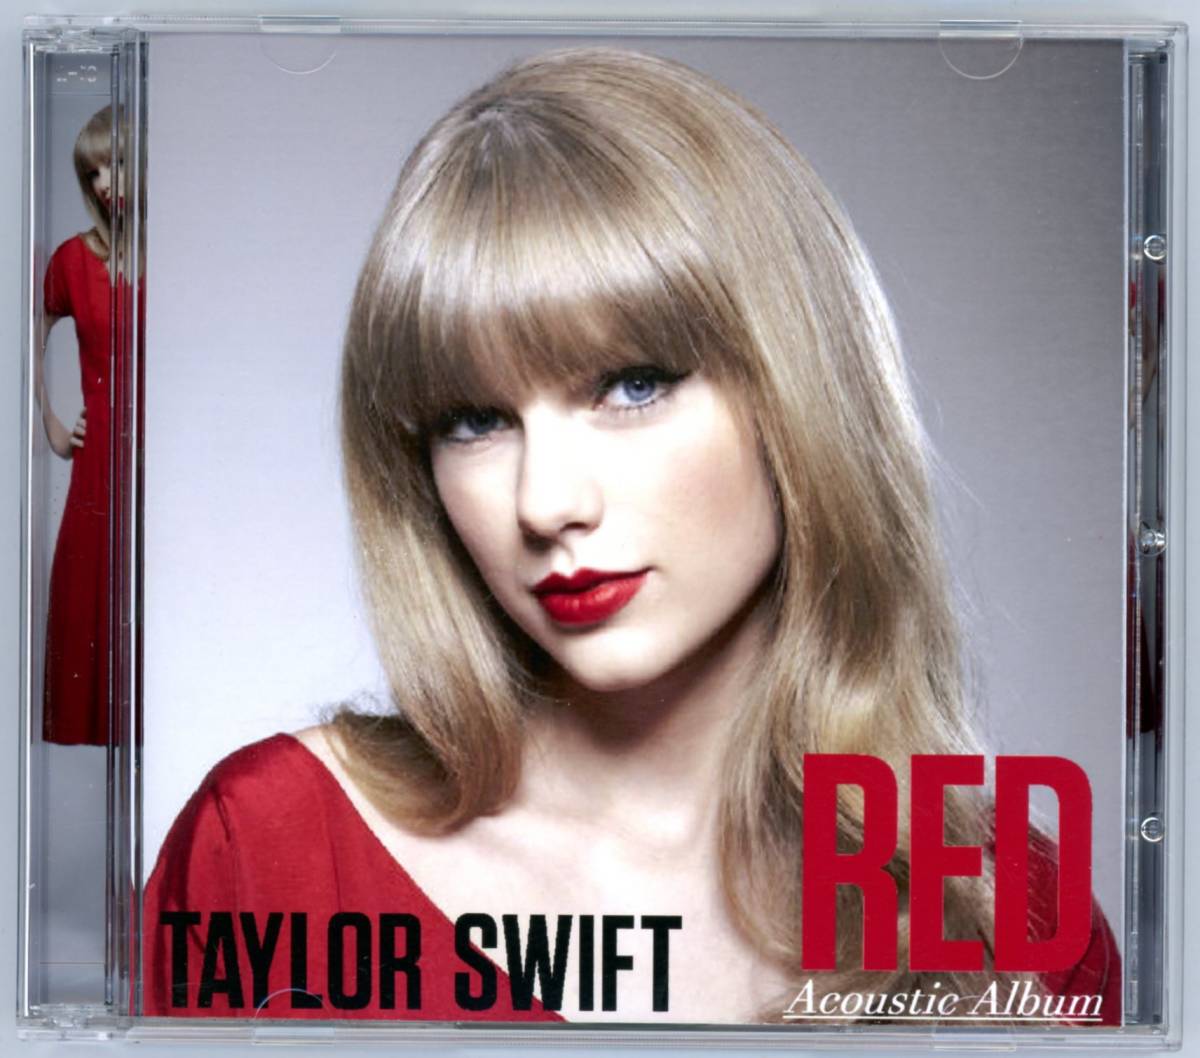 TAYLOR SWIFT RED Acoustic Album 2CD未開封新品_画像1